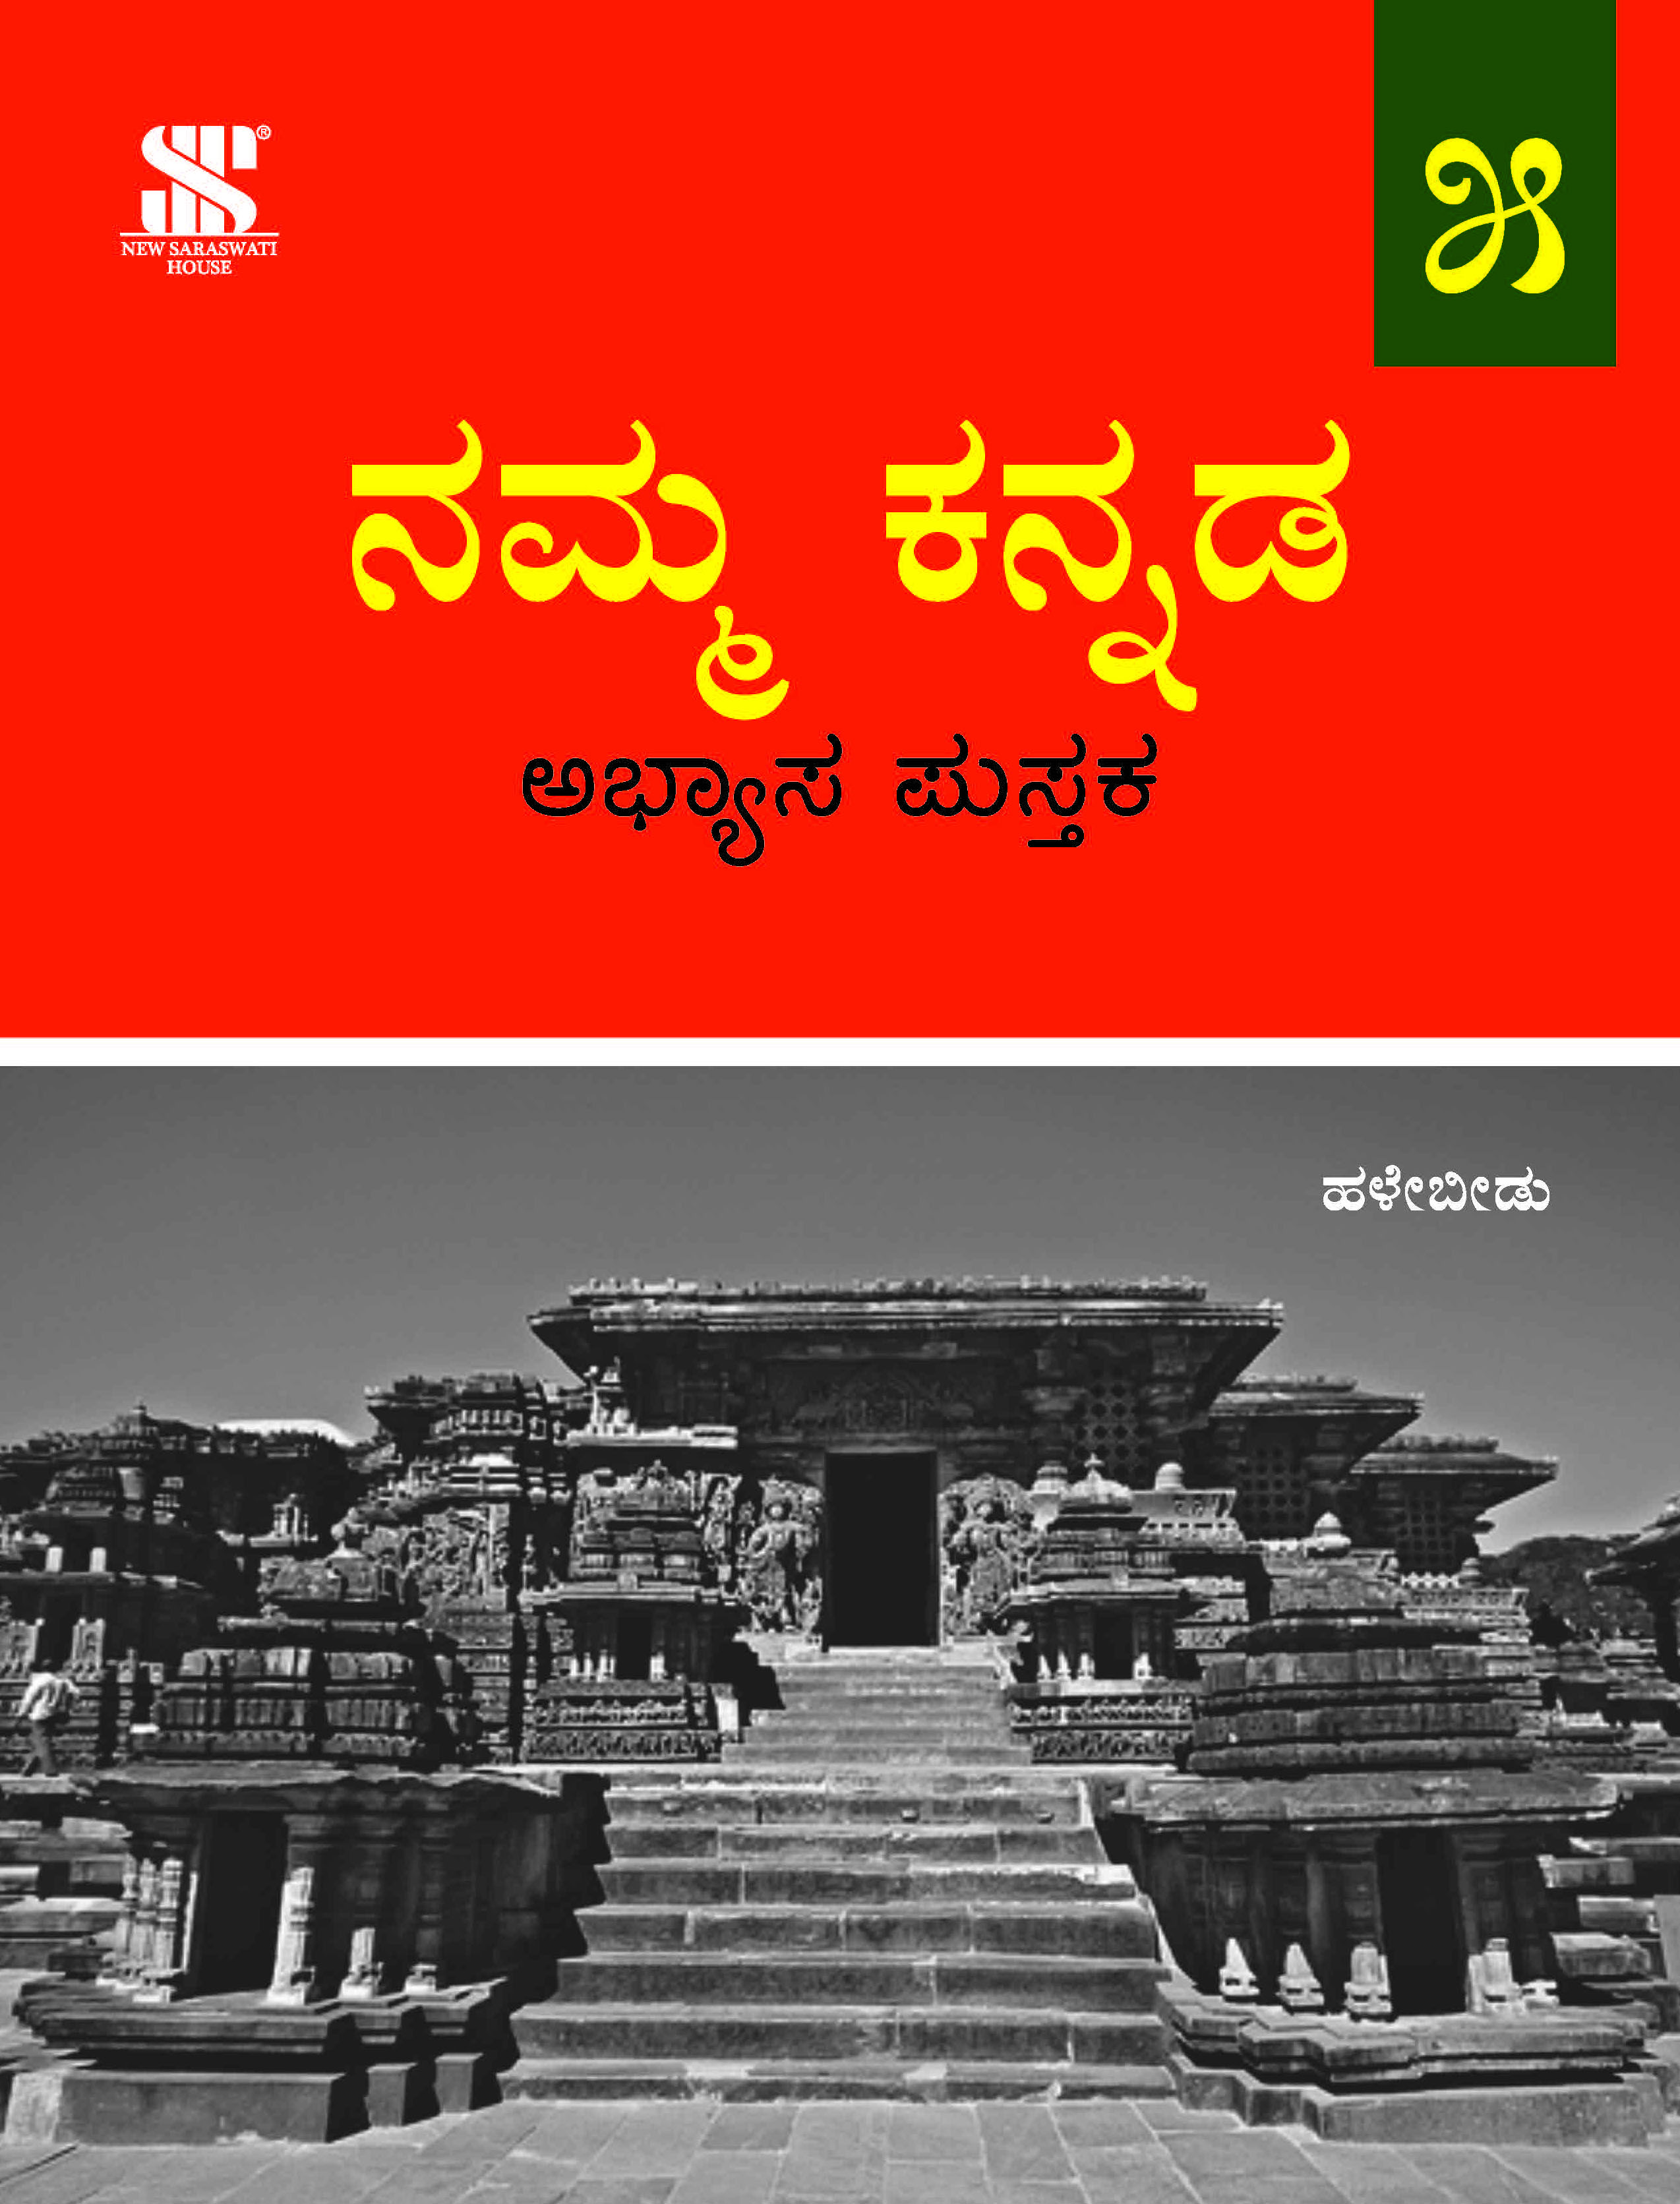 Namma Kannada-5